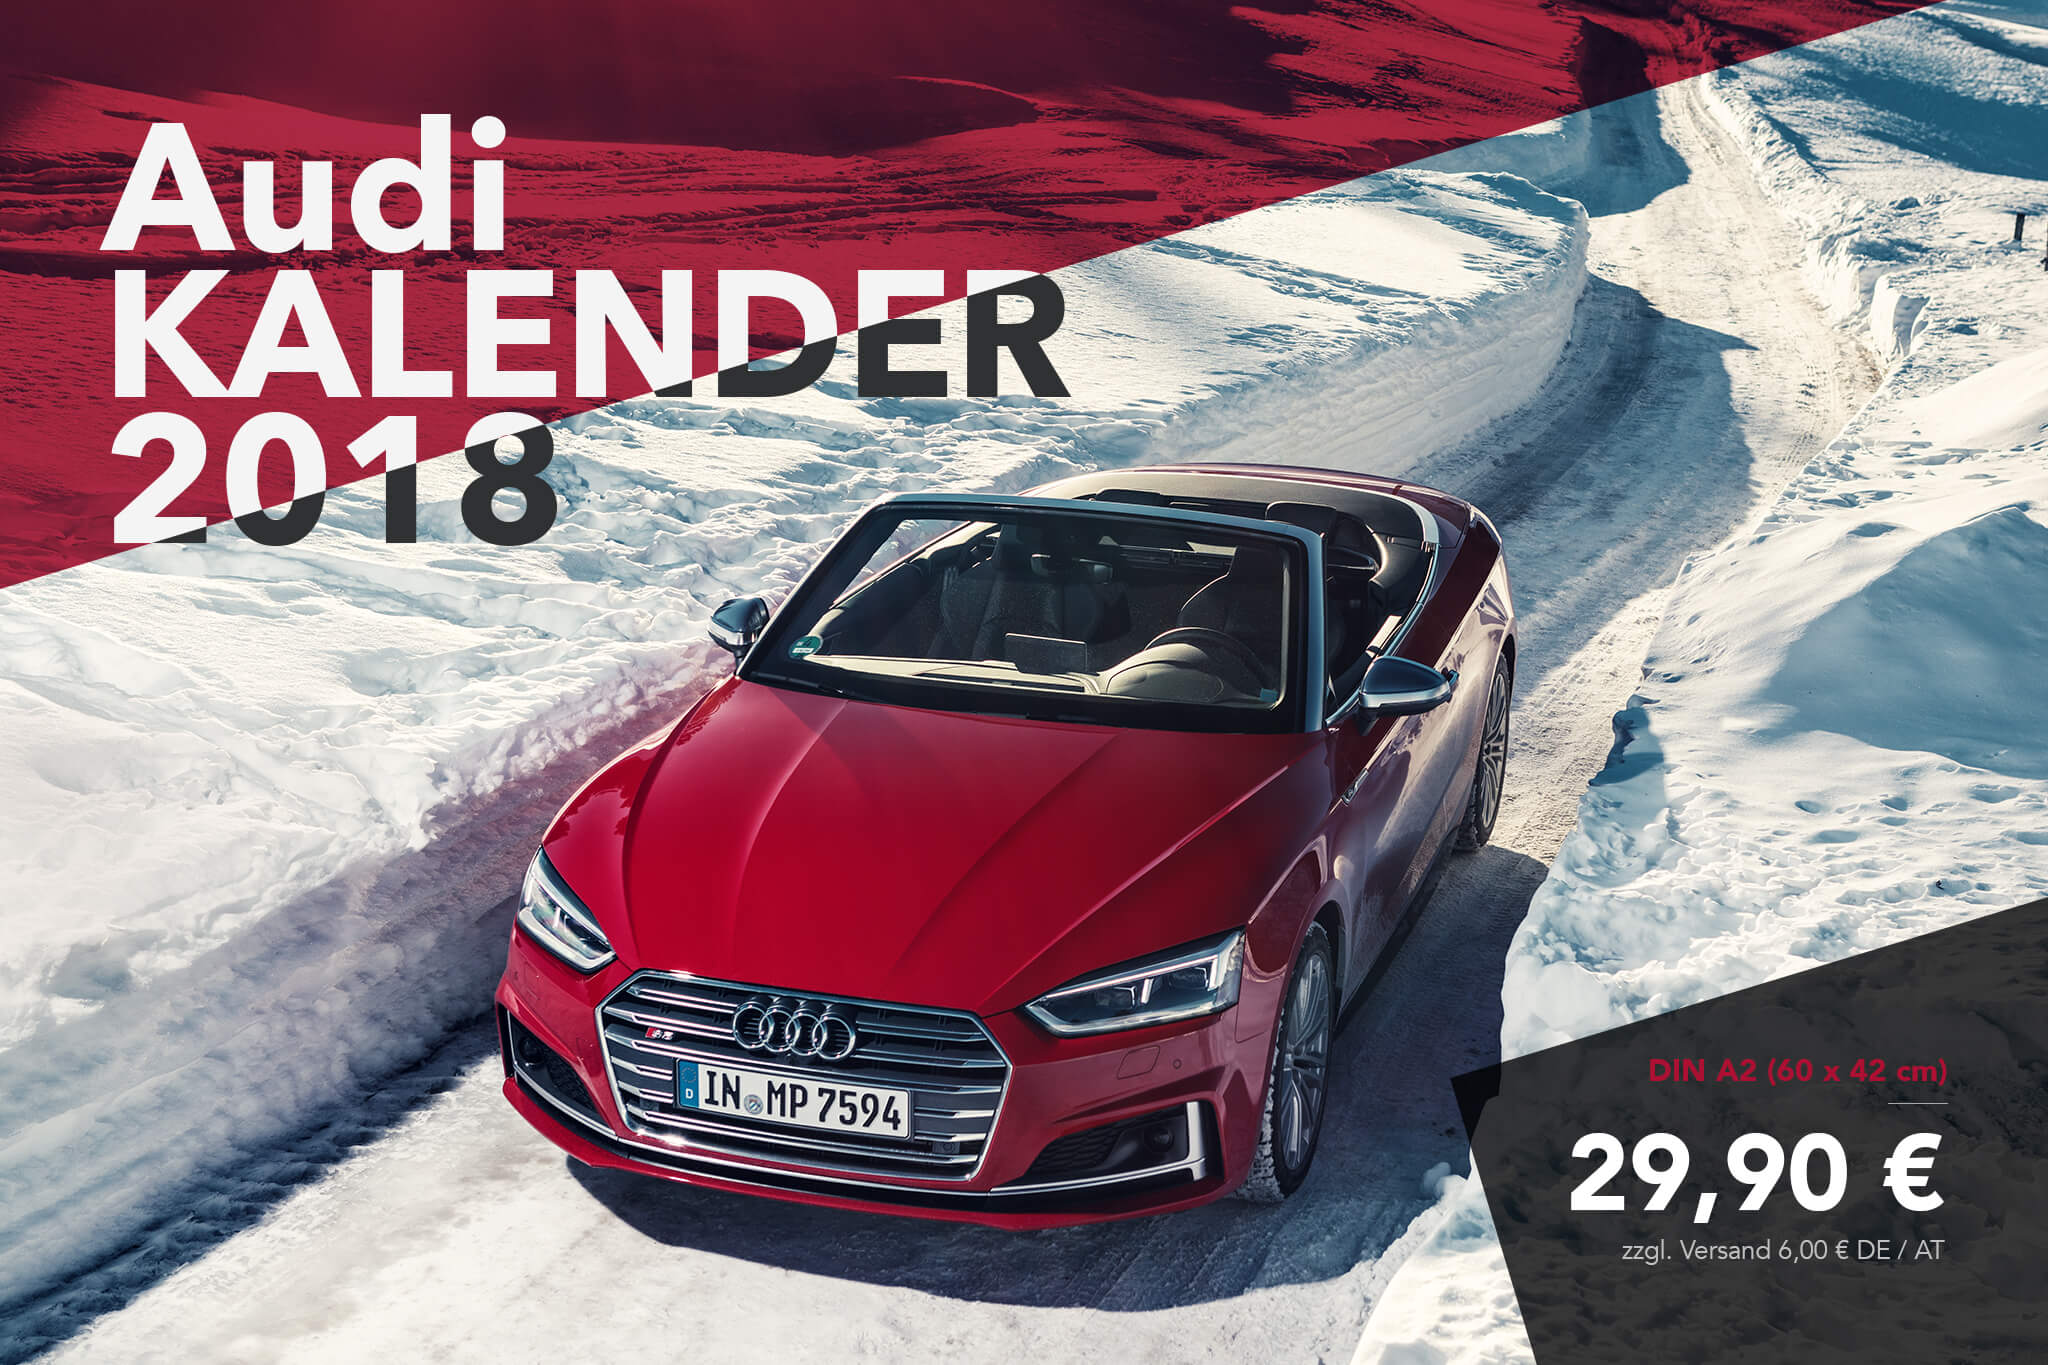 Audi Kalender 2018 - Simninja Special